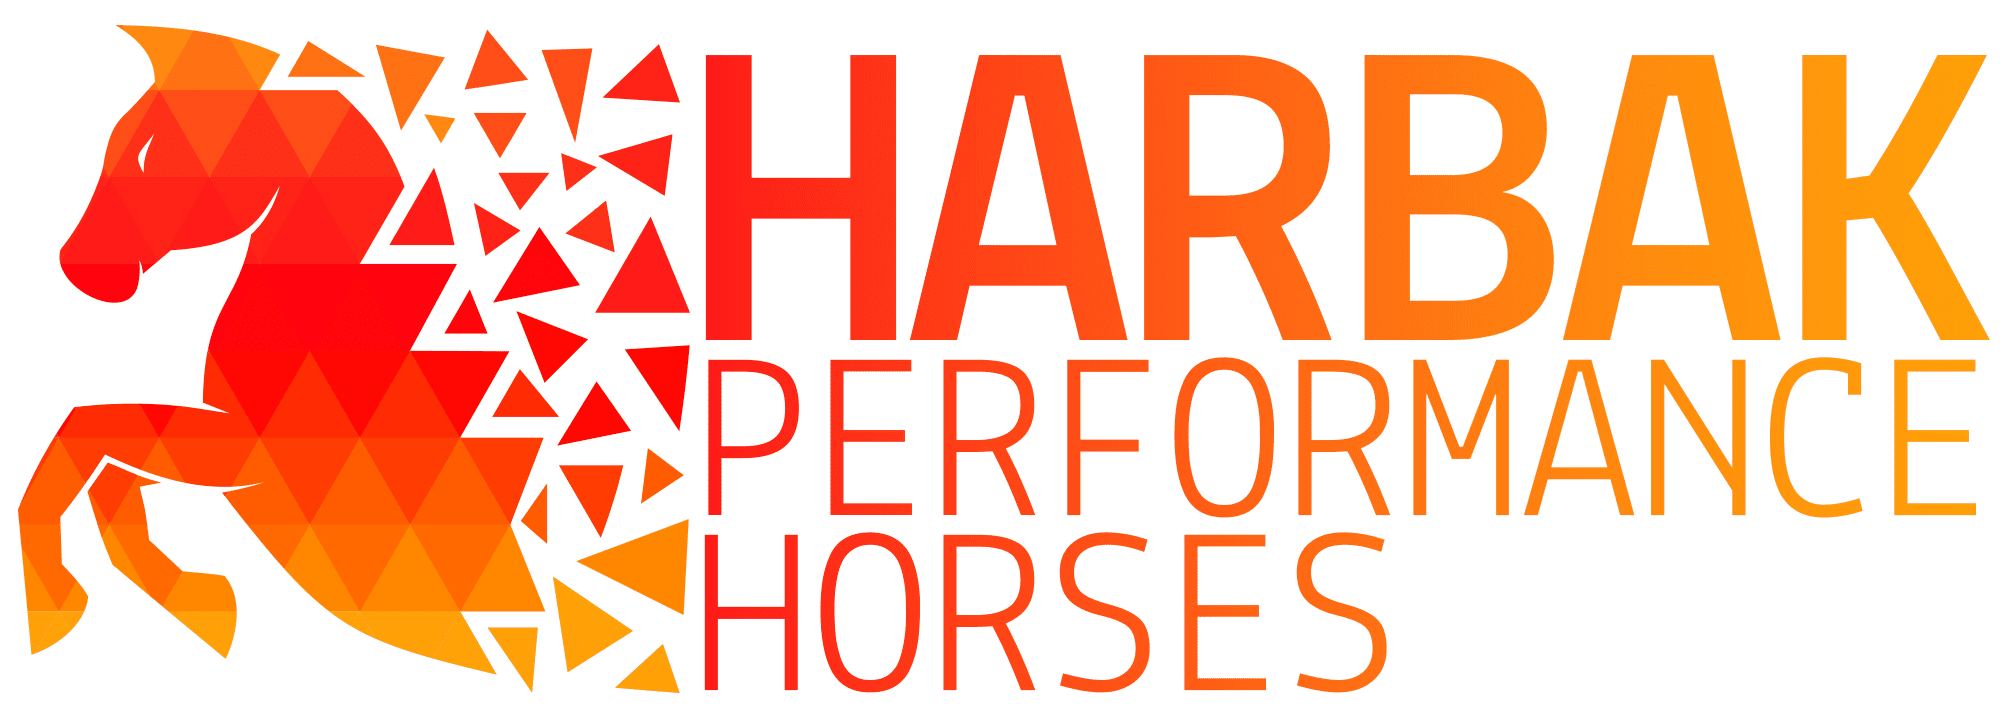 Harbak Performance Horses